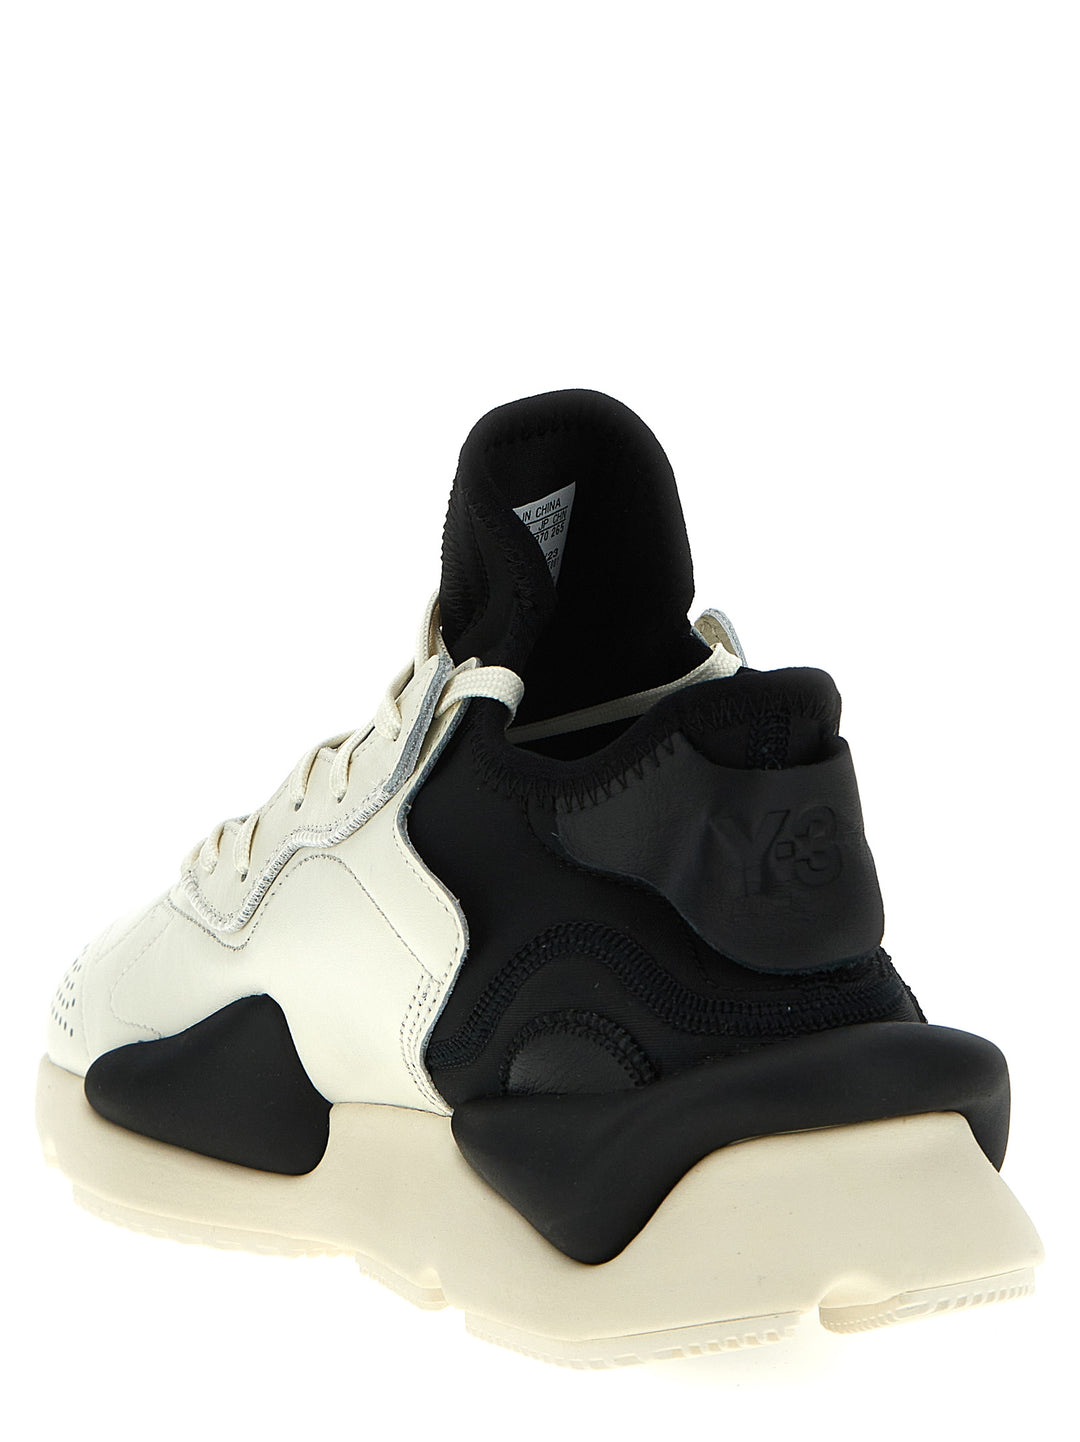 Kaiwa Sneakers Bianco/Nero